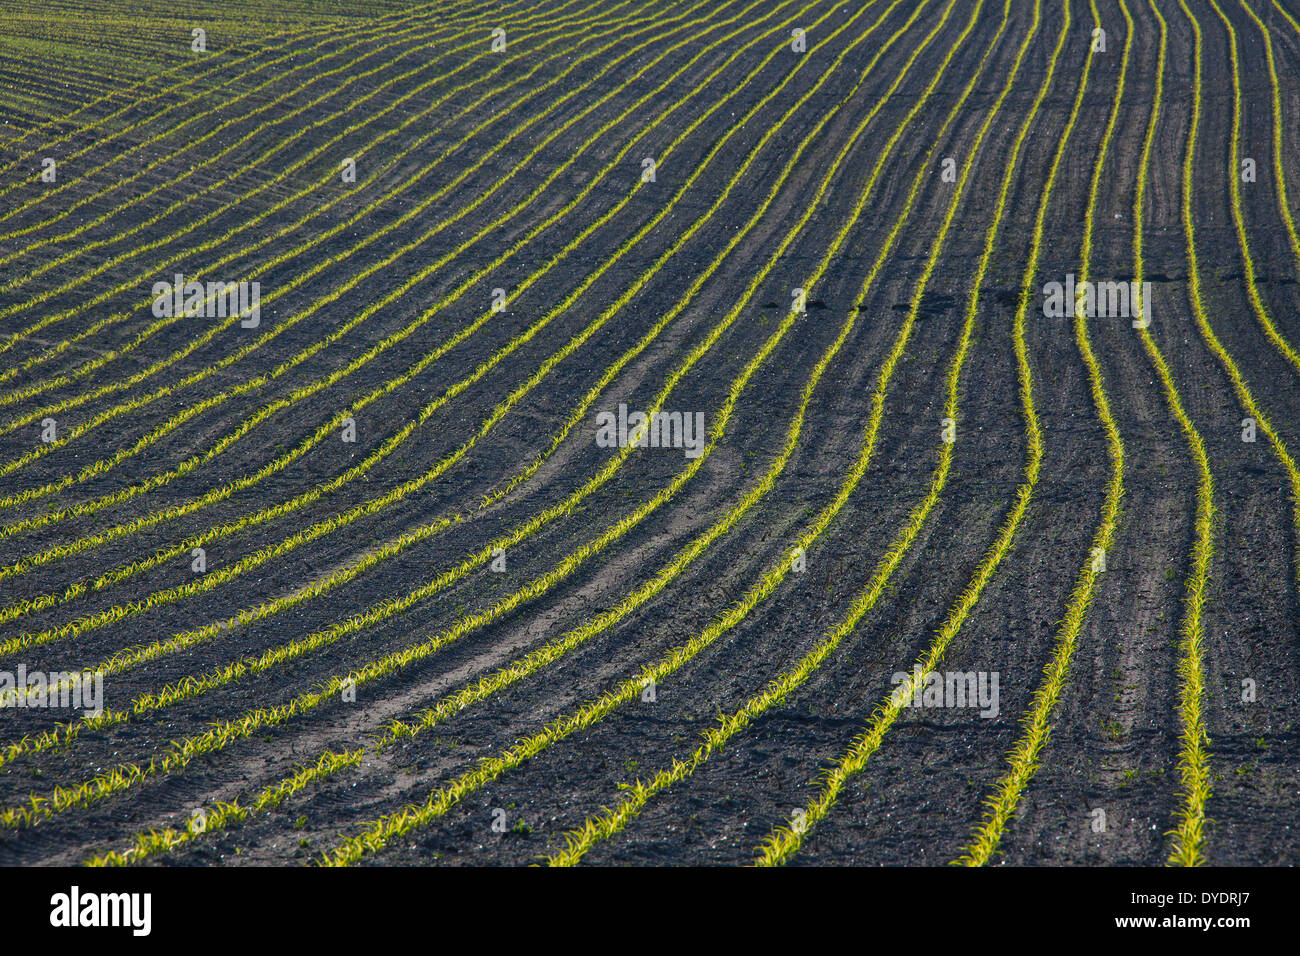 Rows of maize / corn (Zea mays) seedlings growing in field in spring Stock Photo